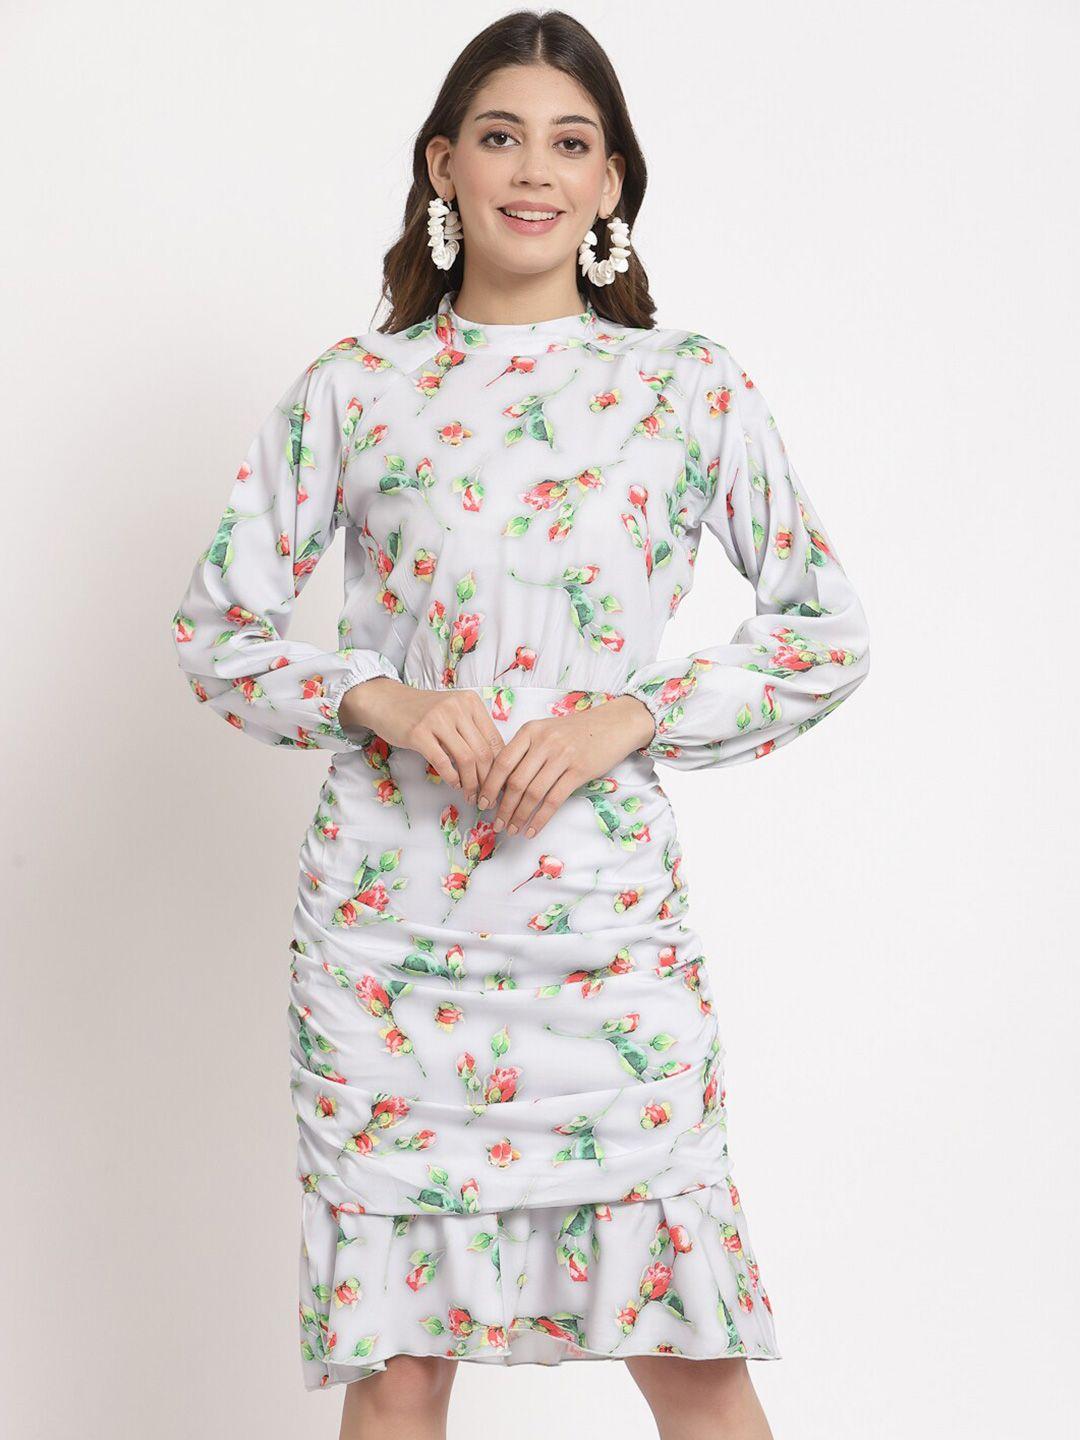 aayu grey floral crepe a-line dress